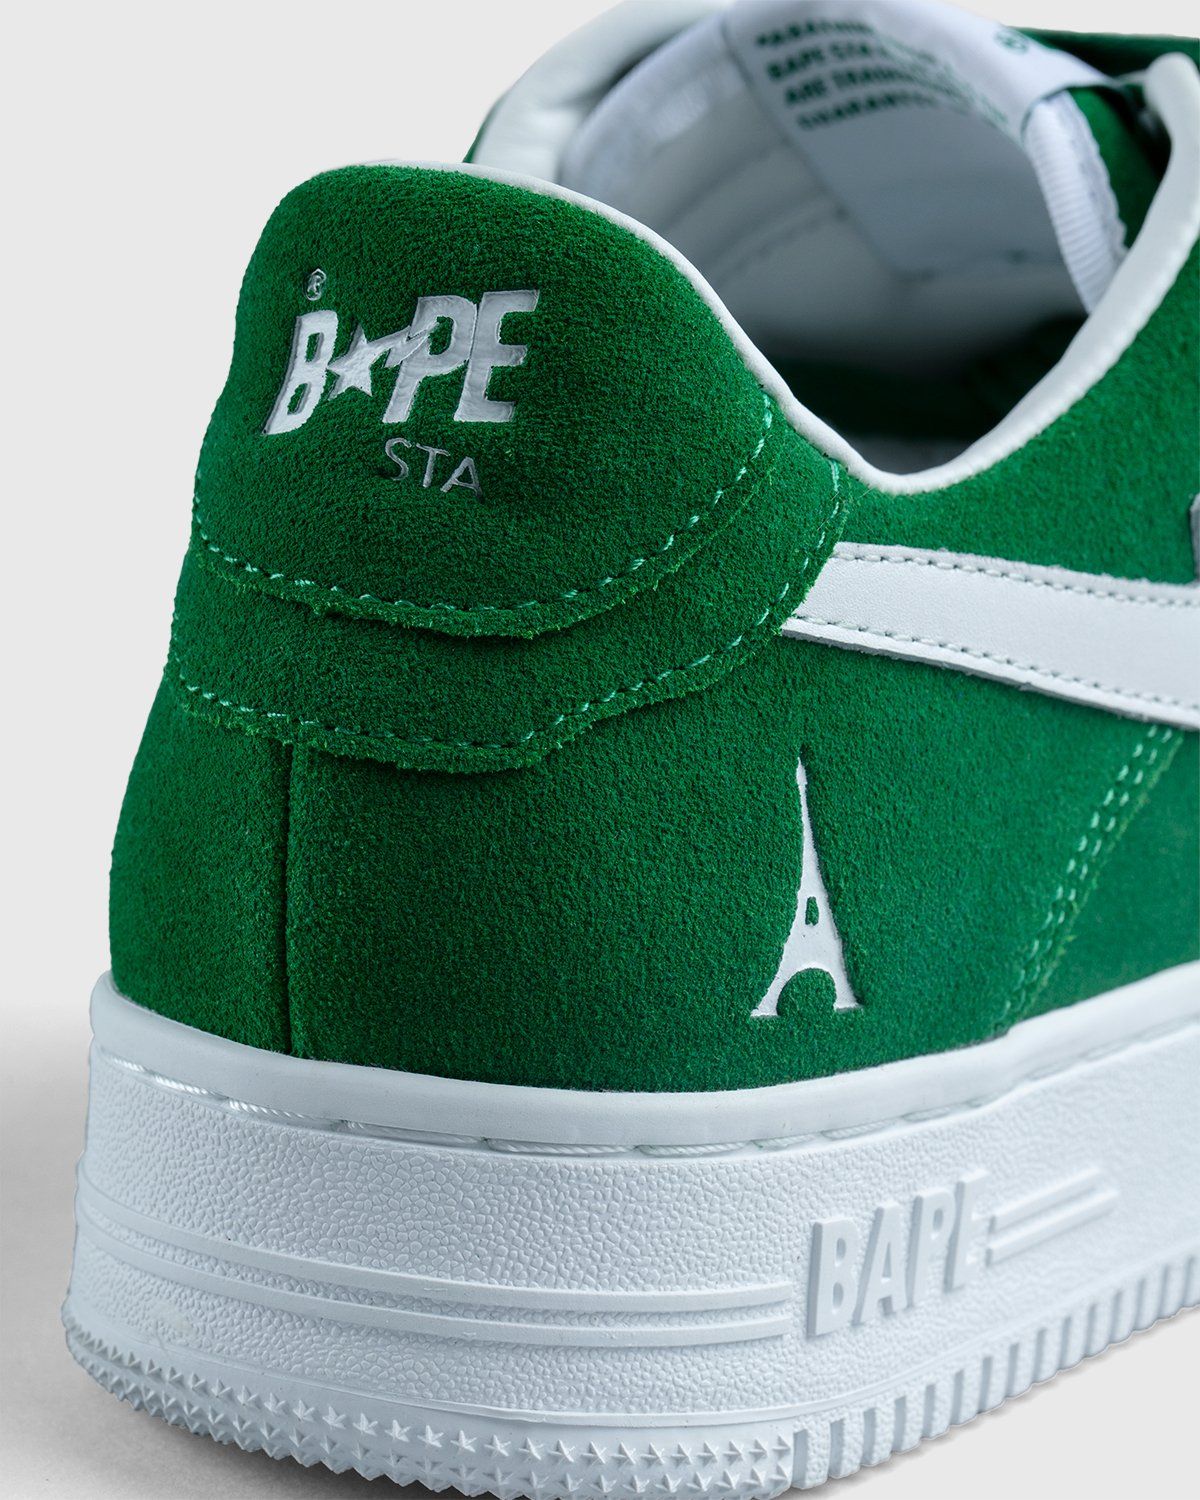 BAPE x Highsnobiety – BAPE STA Green - Low Top Sneakers - Green - Image 7